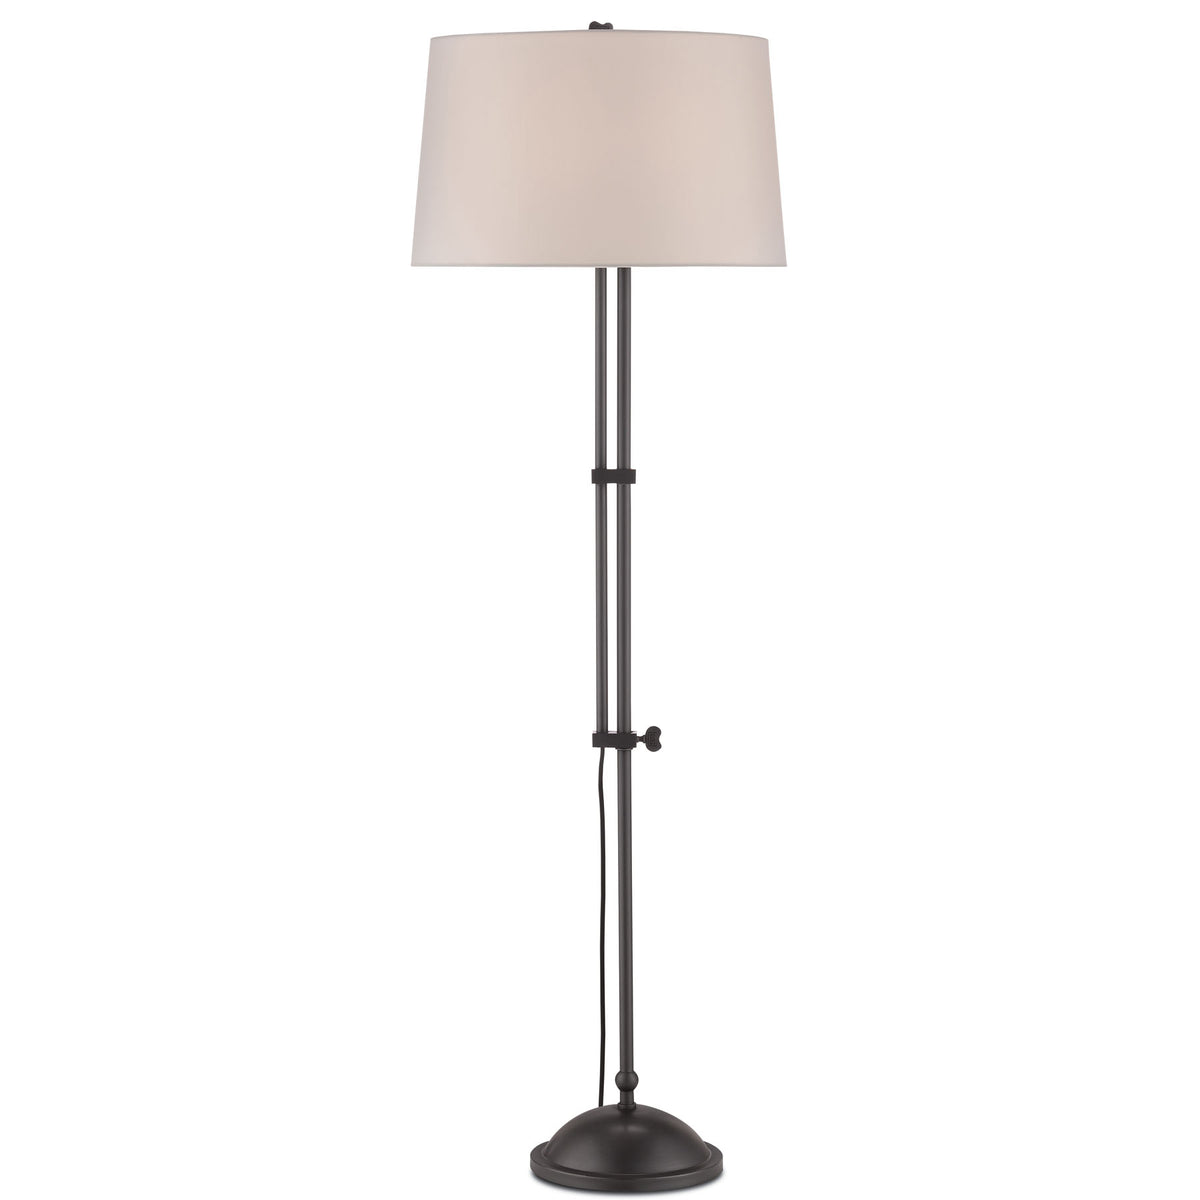 Kilby Floor Lamp